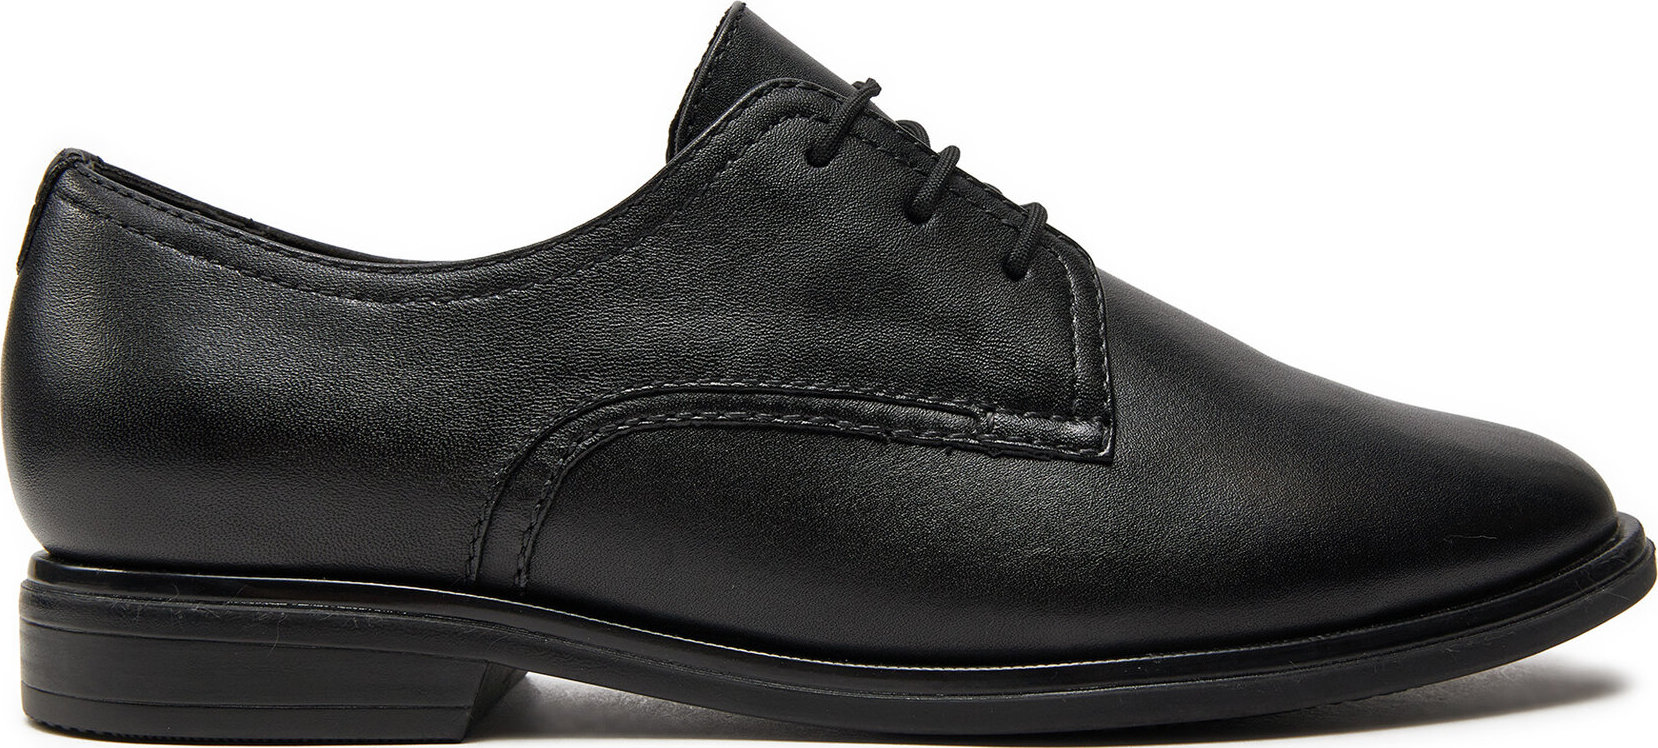 Oxfordy Tamaris 1-23218-41 Black Leather 003